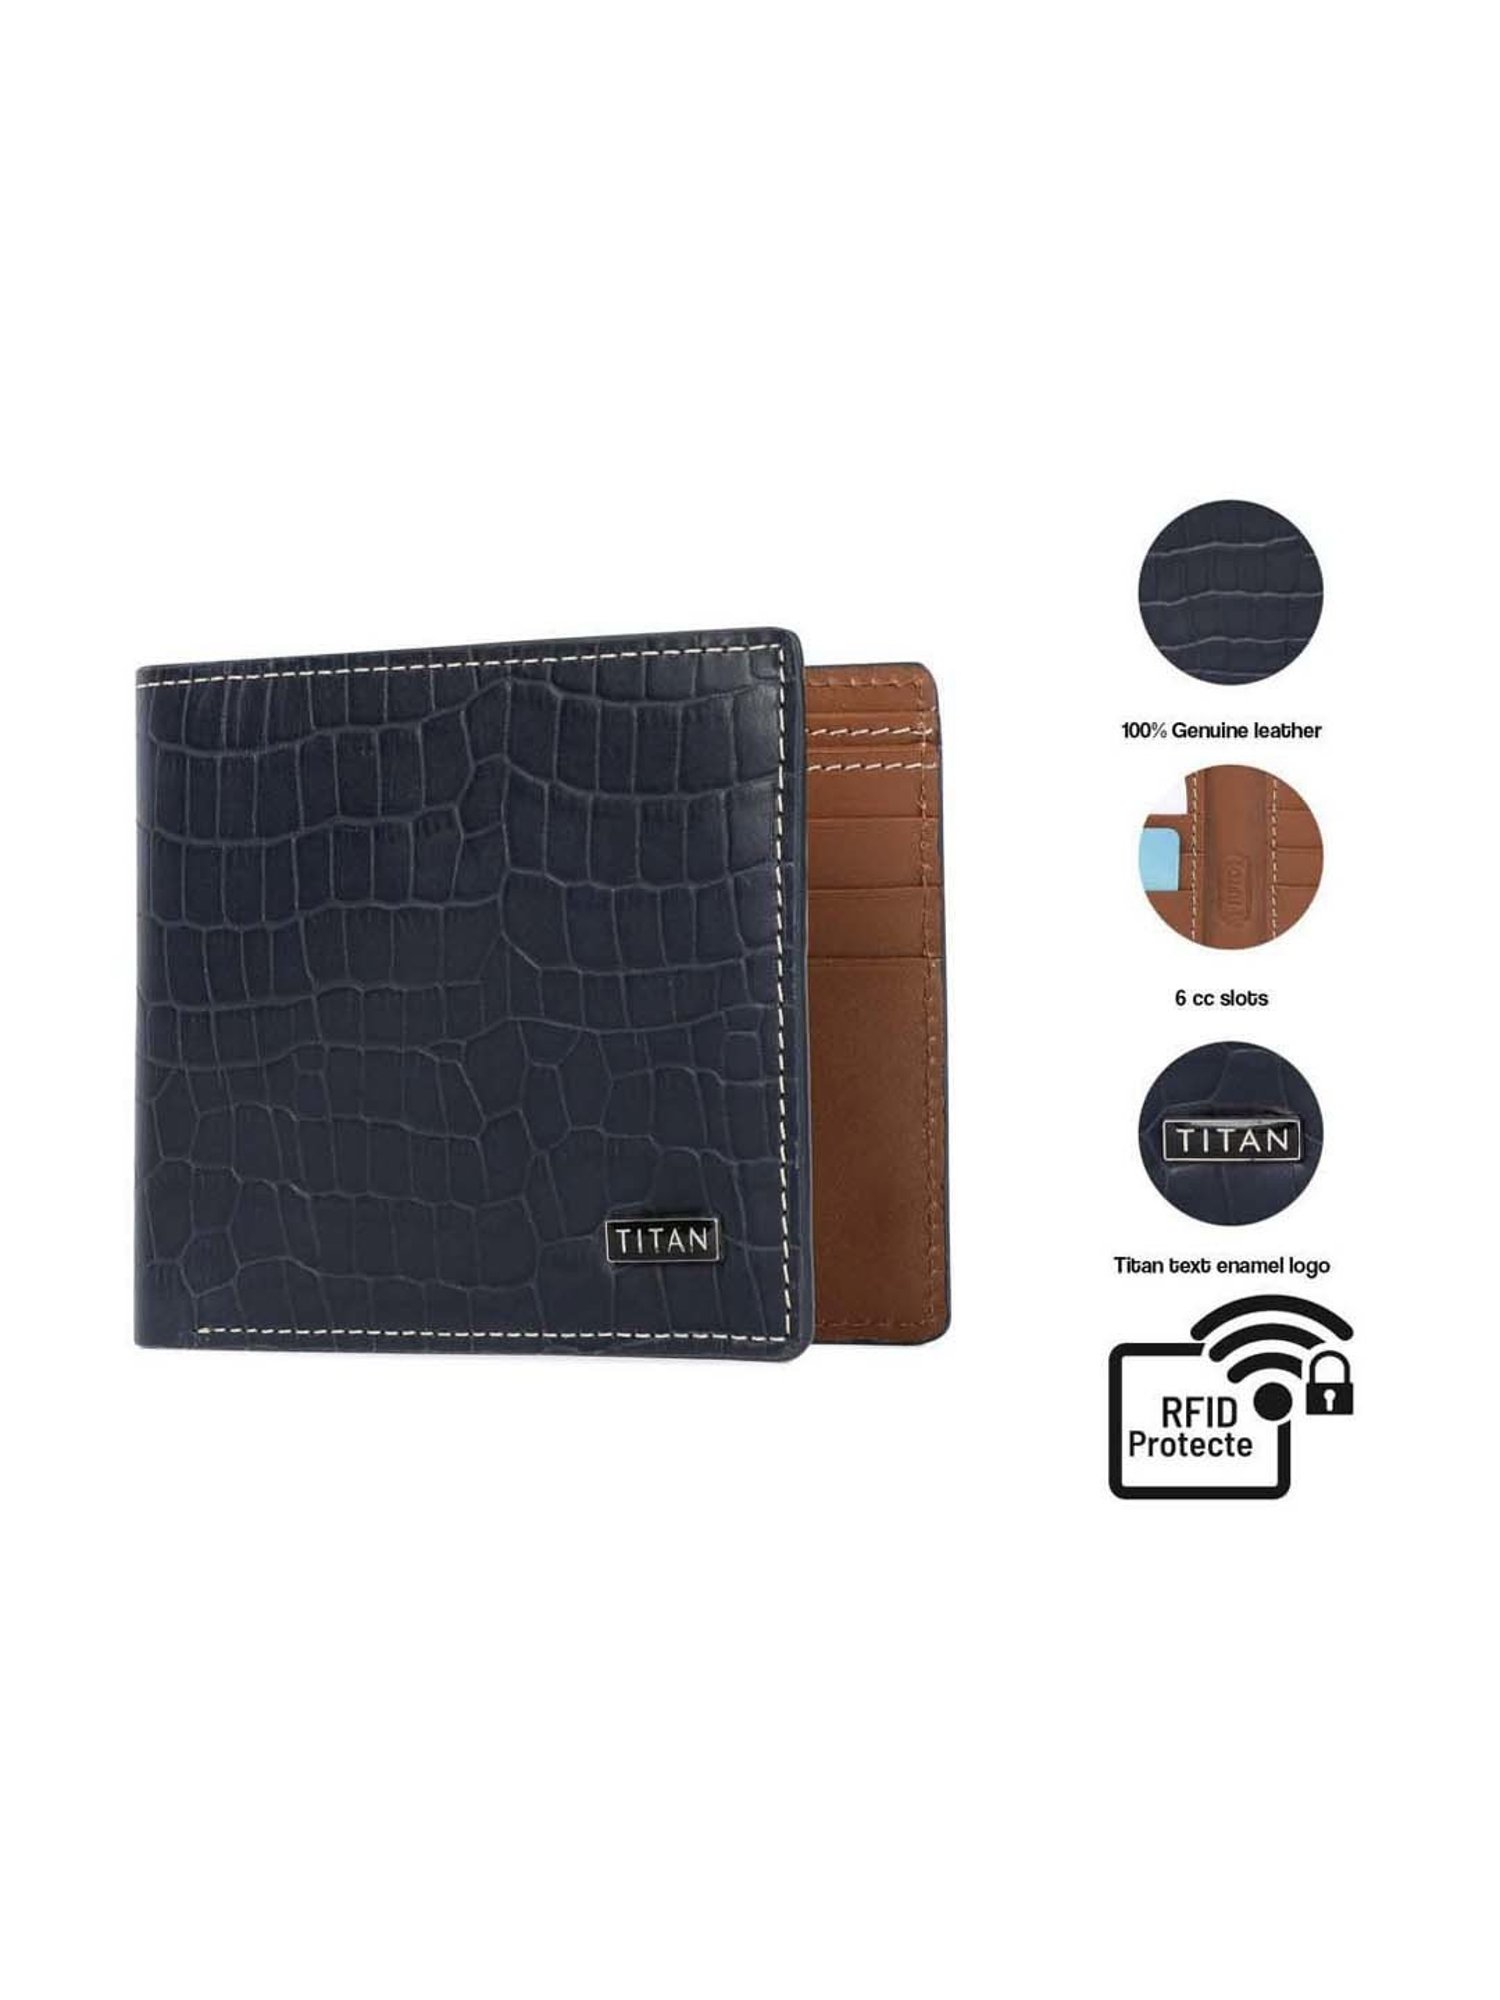 Buy Titan Textured Leather Bifold Wallet in Color Black Online